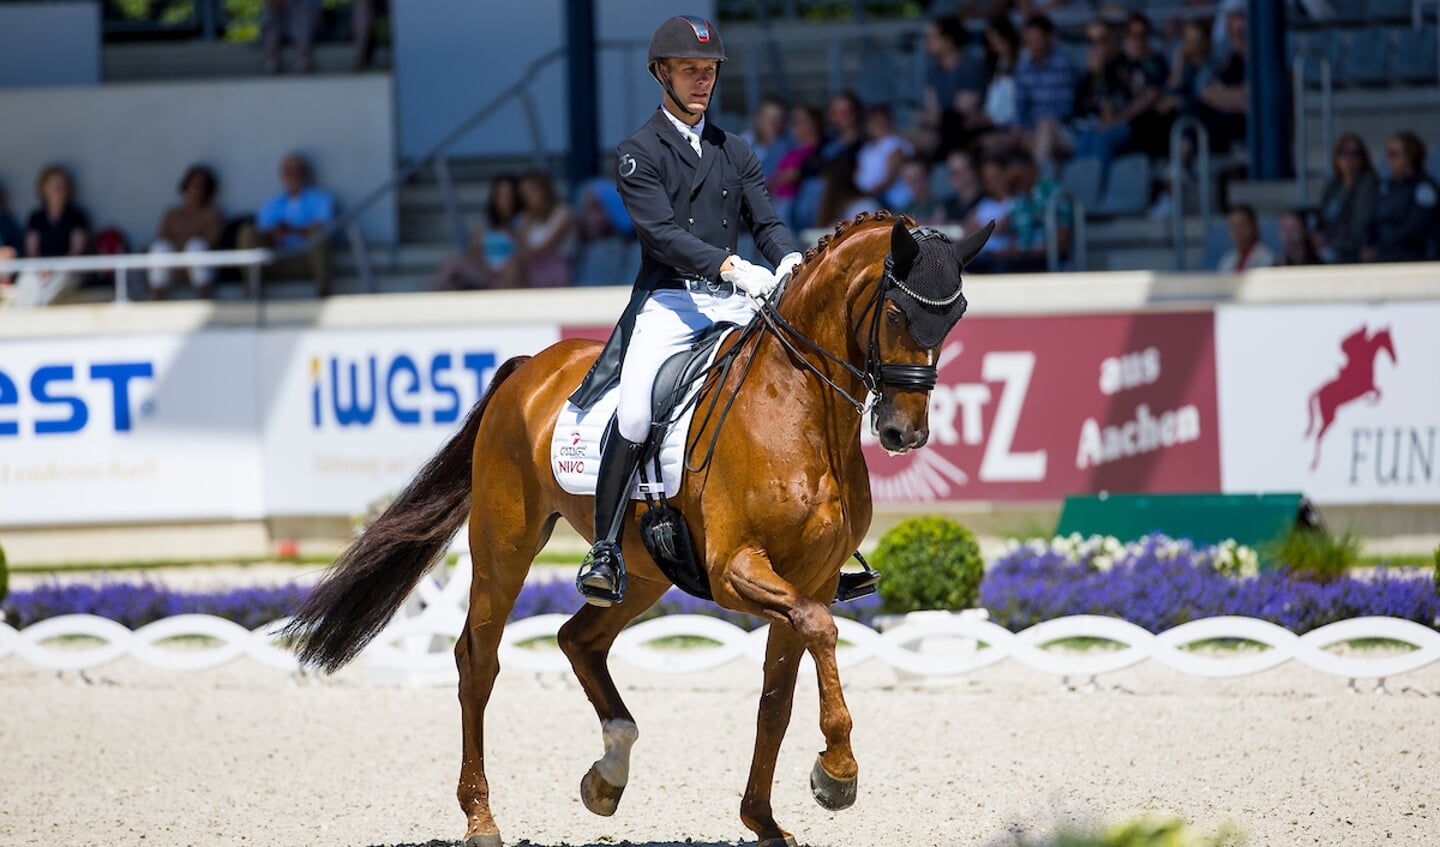 Daniel Bachmann Andersen - Marshall Bell
World Equestrian Festival CHIO Aachen 2022
© DigiShots